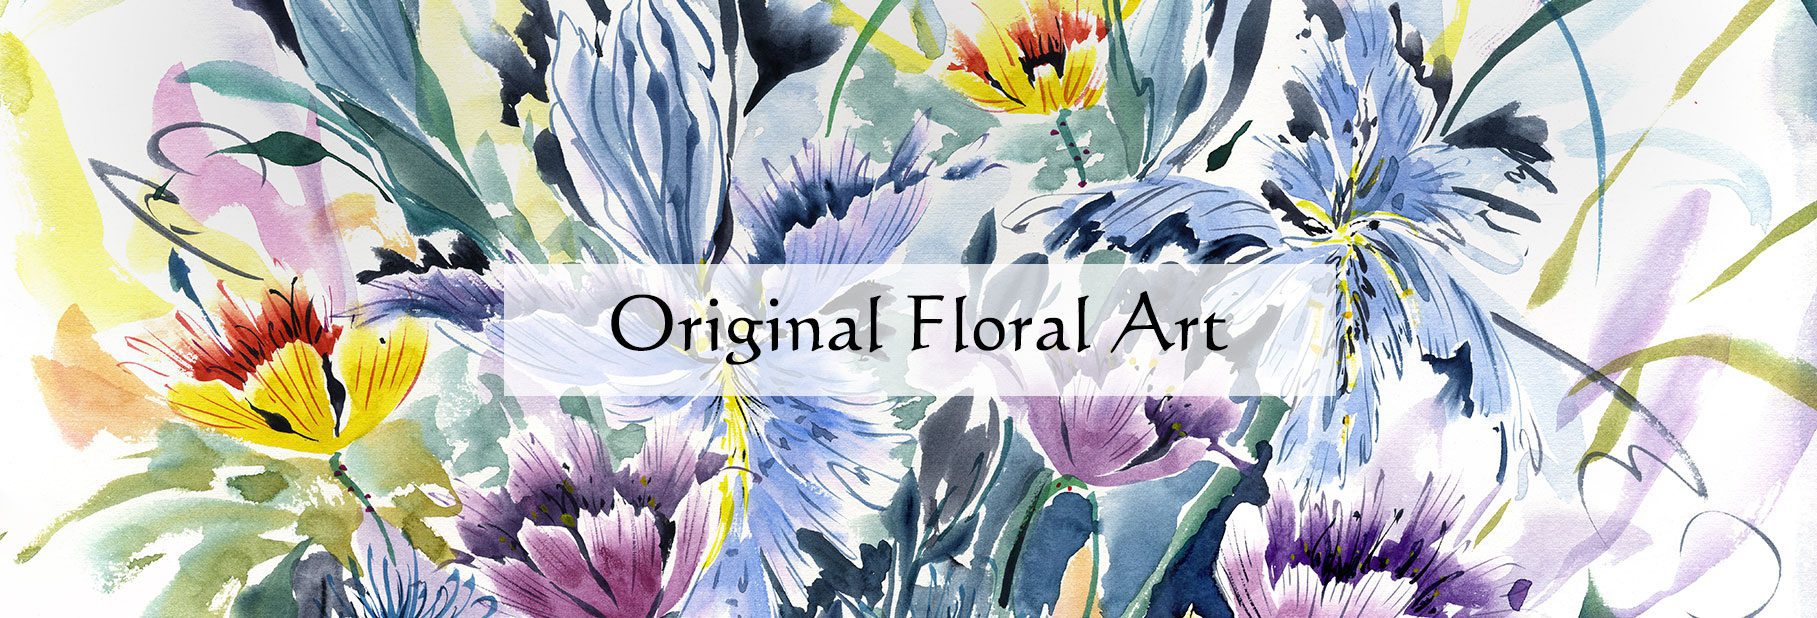 Original Floral Art by Nan Rae